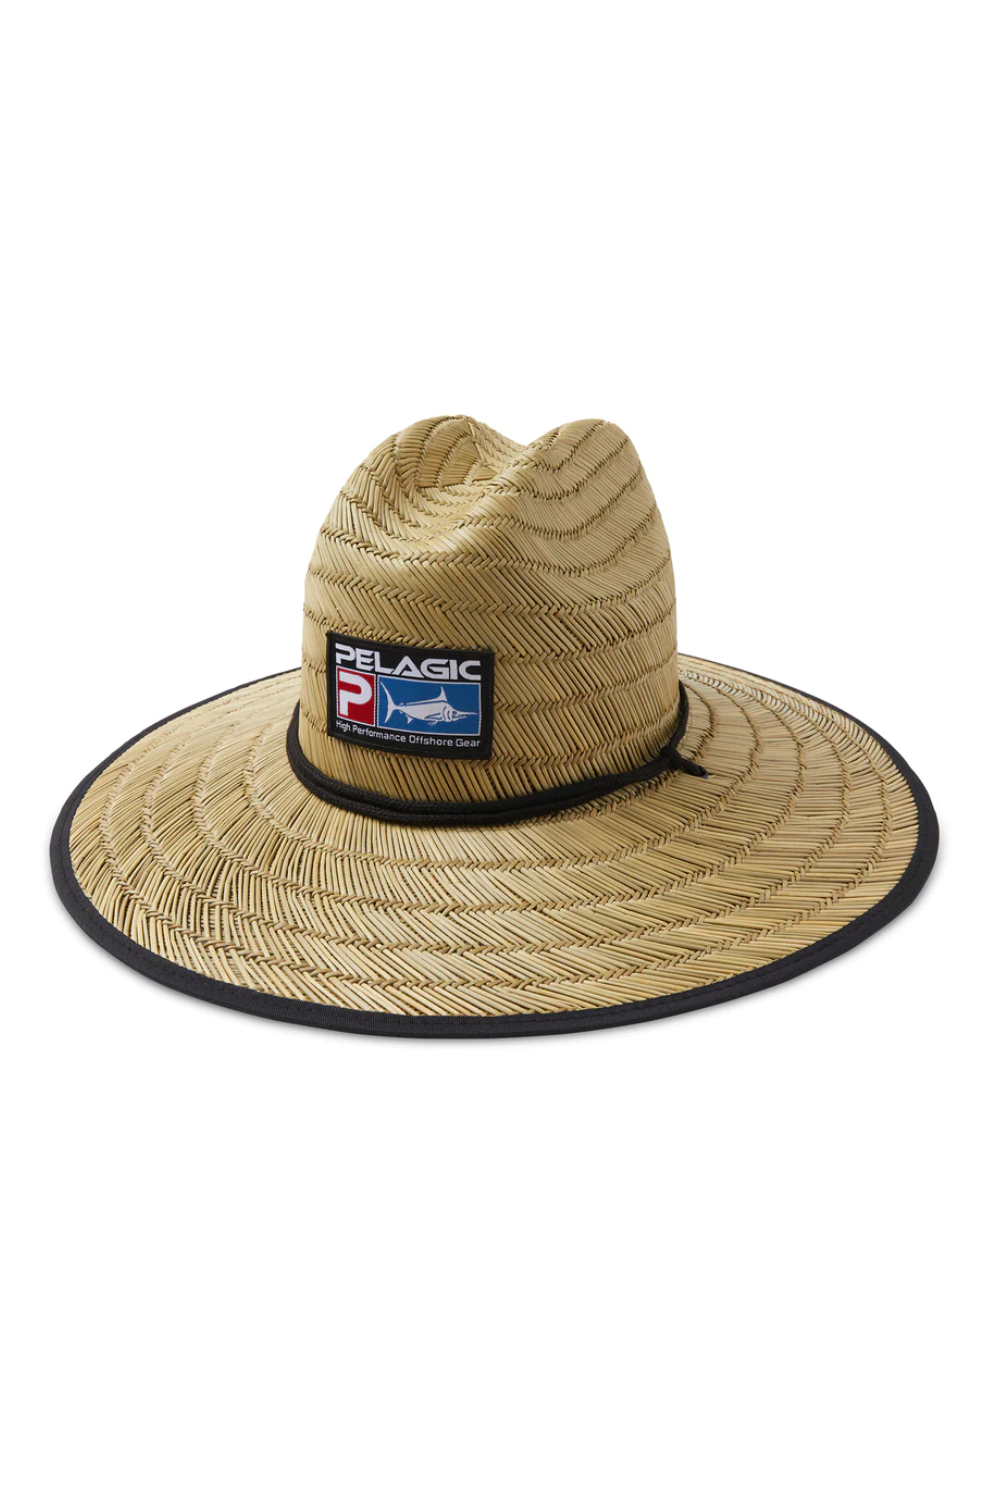 Pelagic Baja Deluxe Full-Brimmed Straw Sun Protection Hat